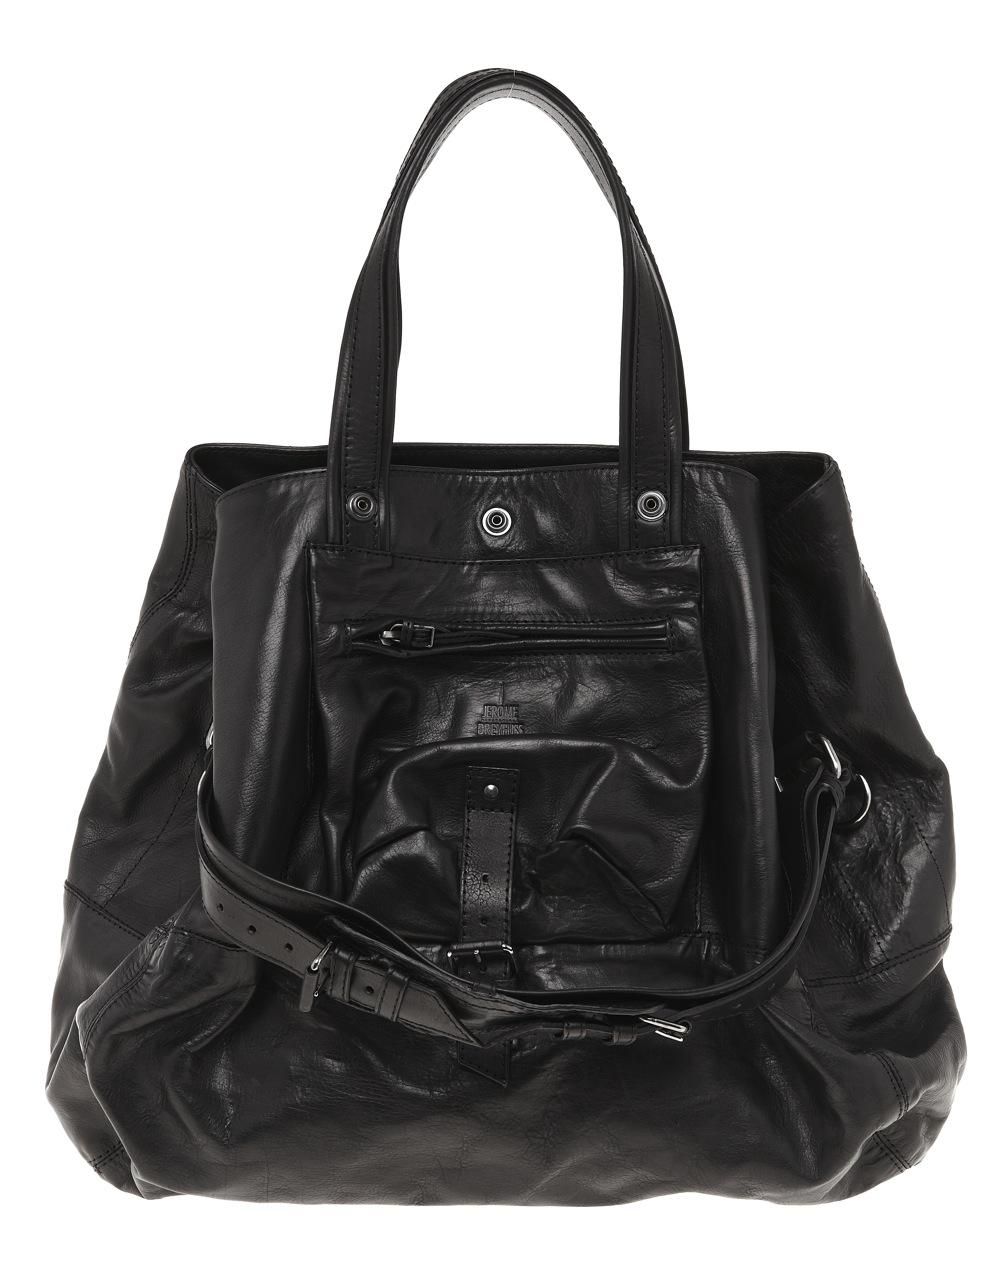 Jerome Dreyfuss Paris Large Billy Leather Bag $1200